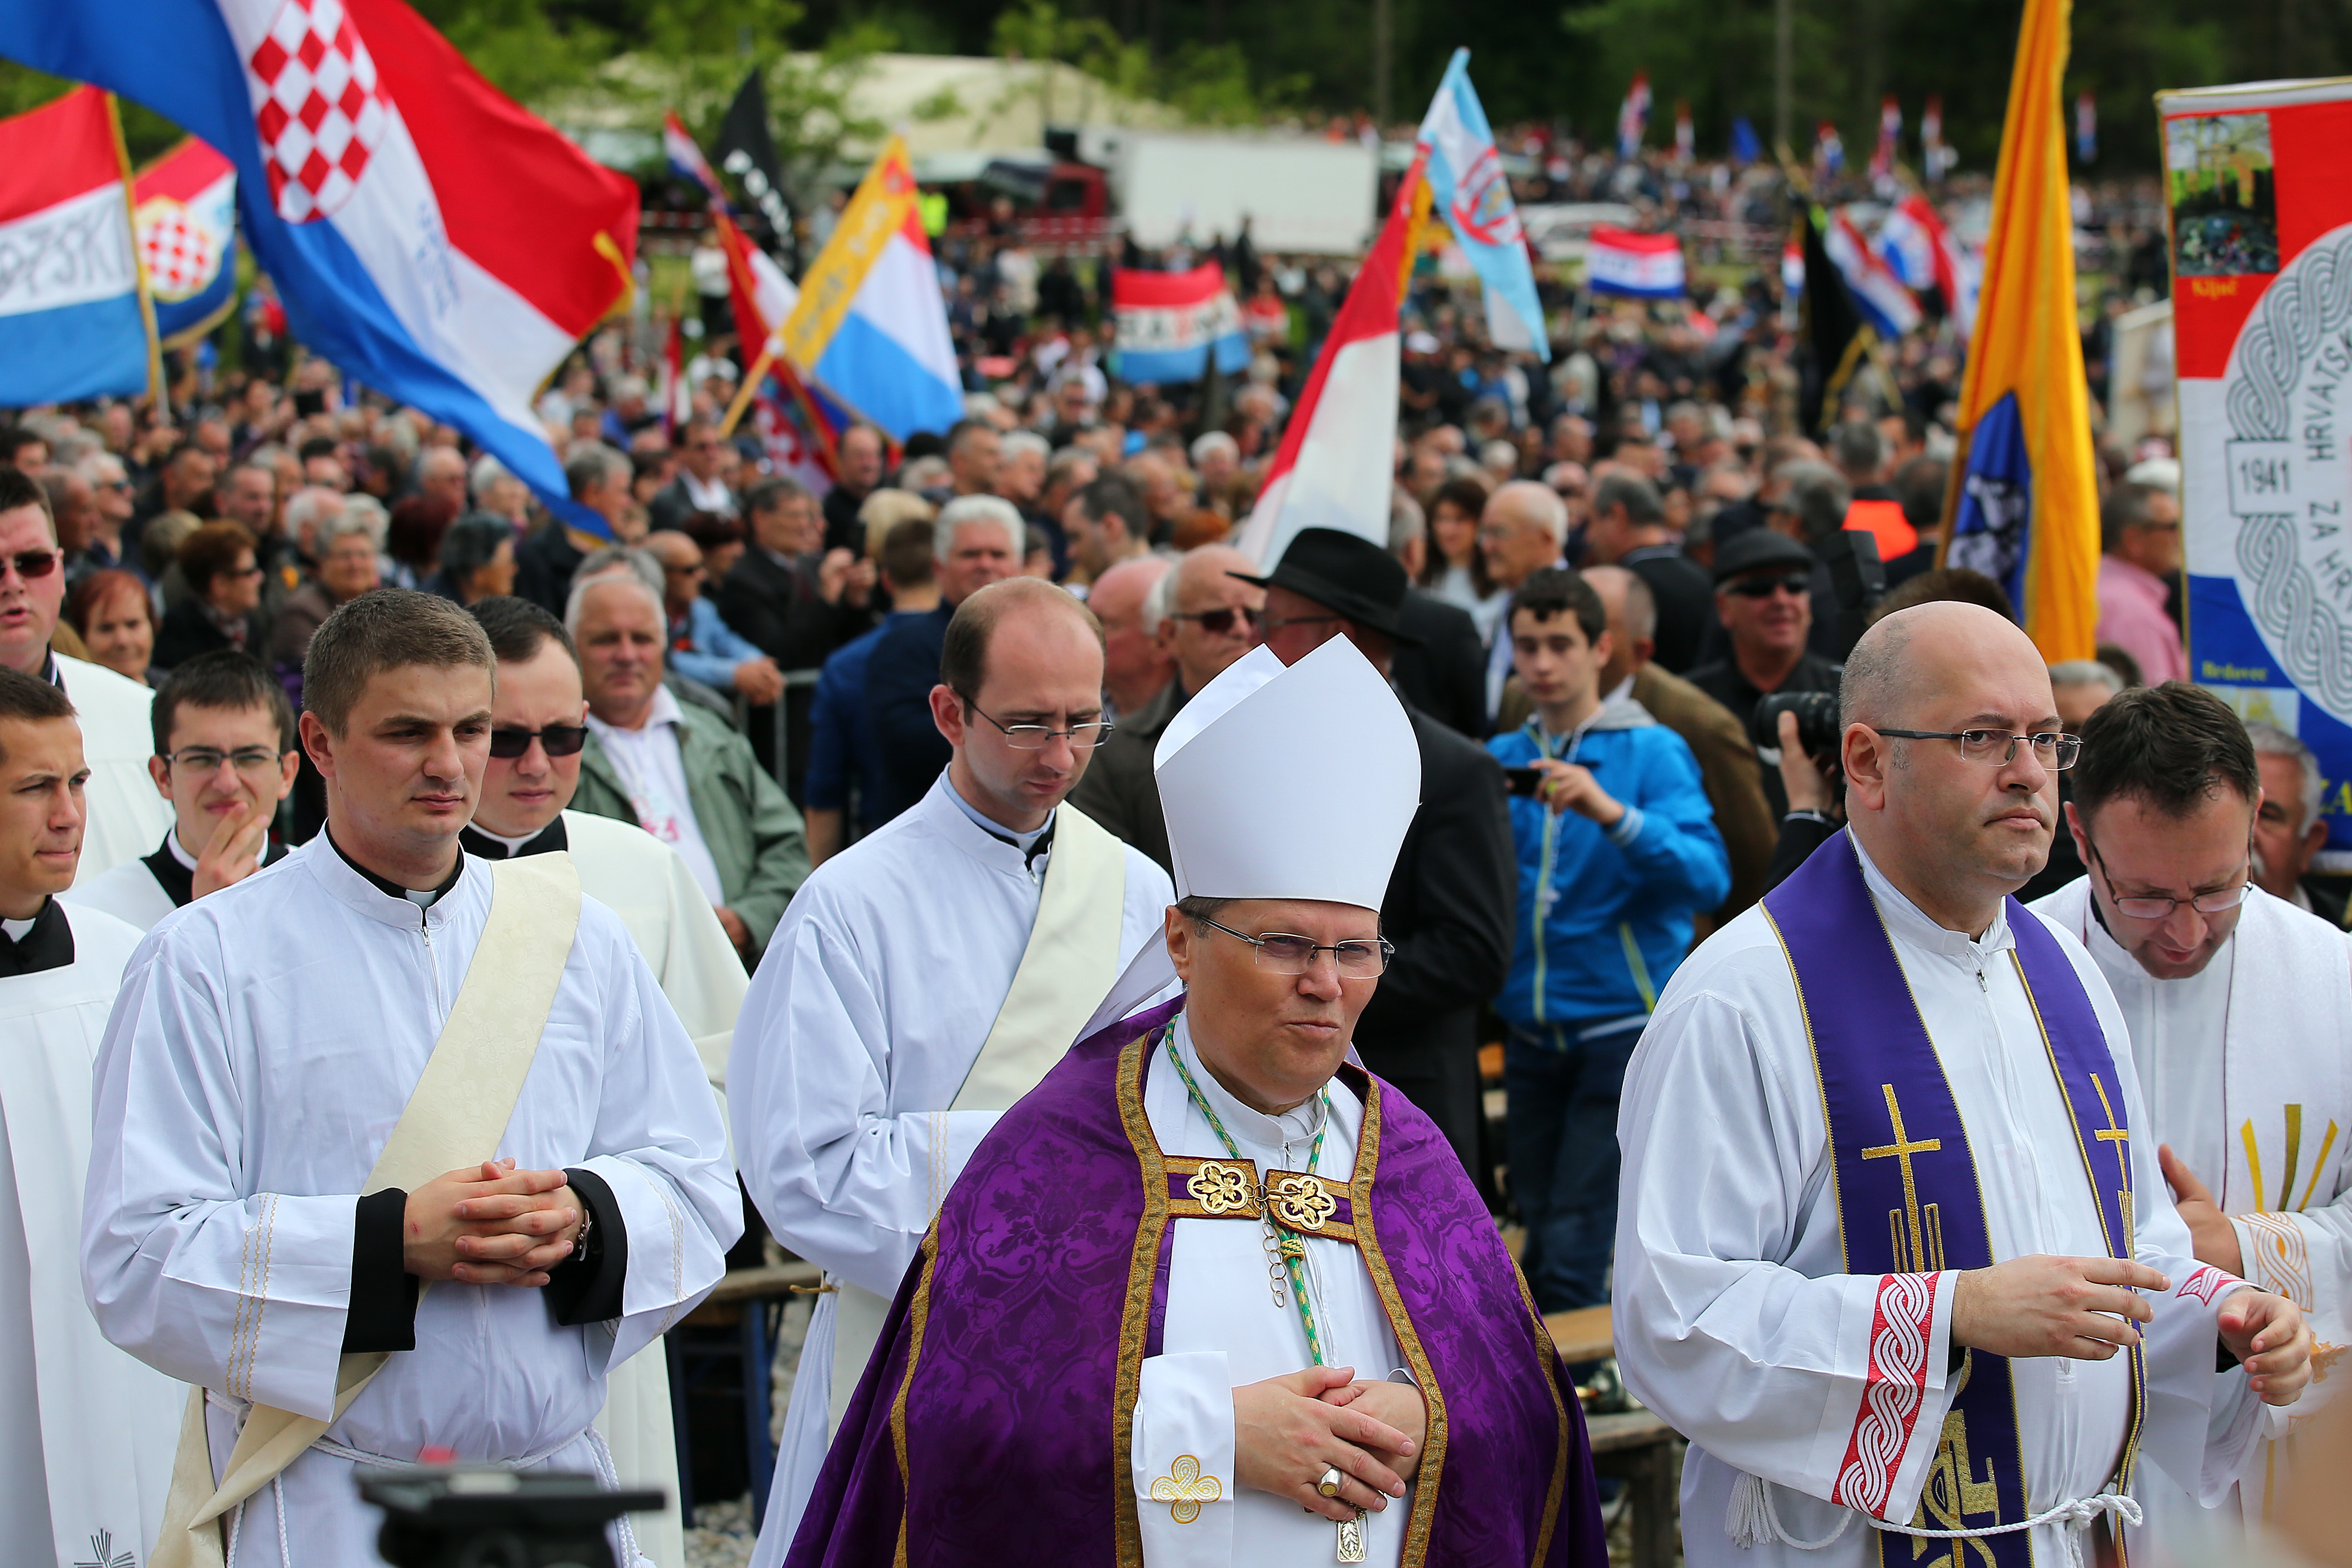 Croatians refused permission for Bleiburg Mass